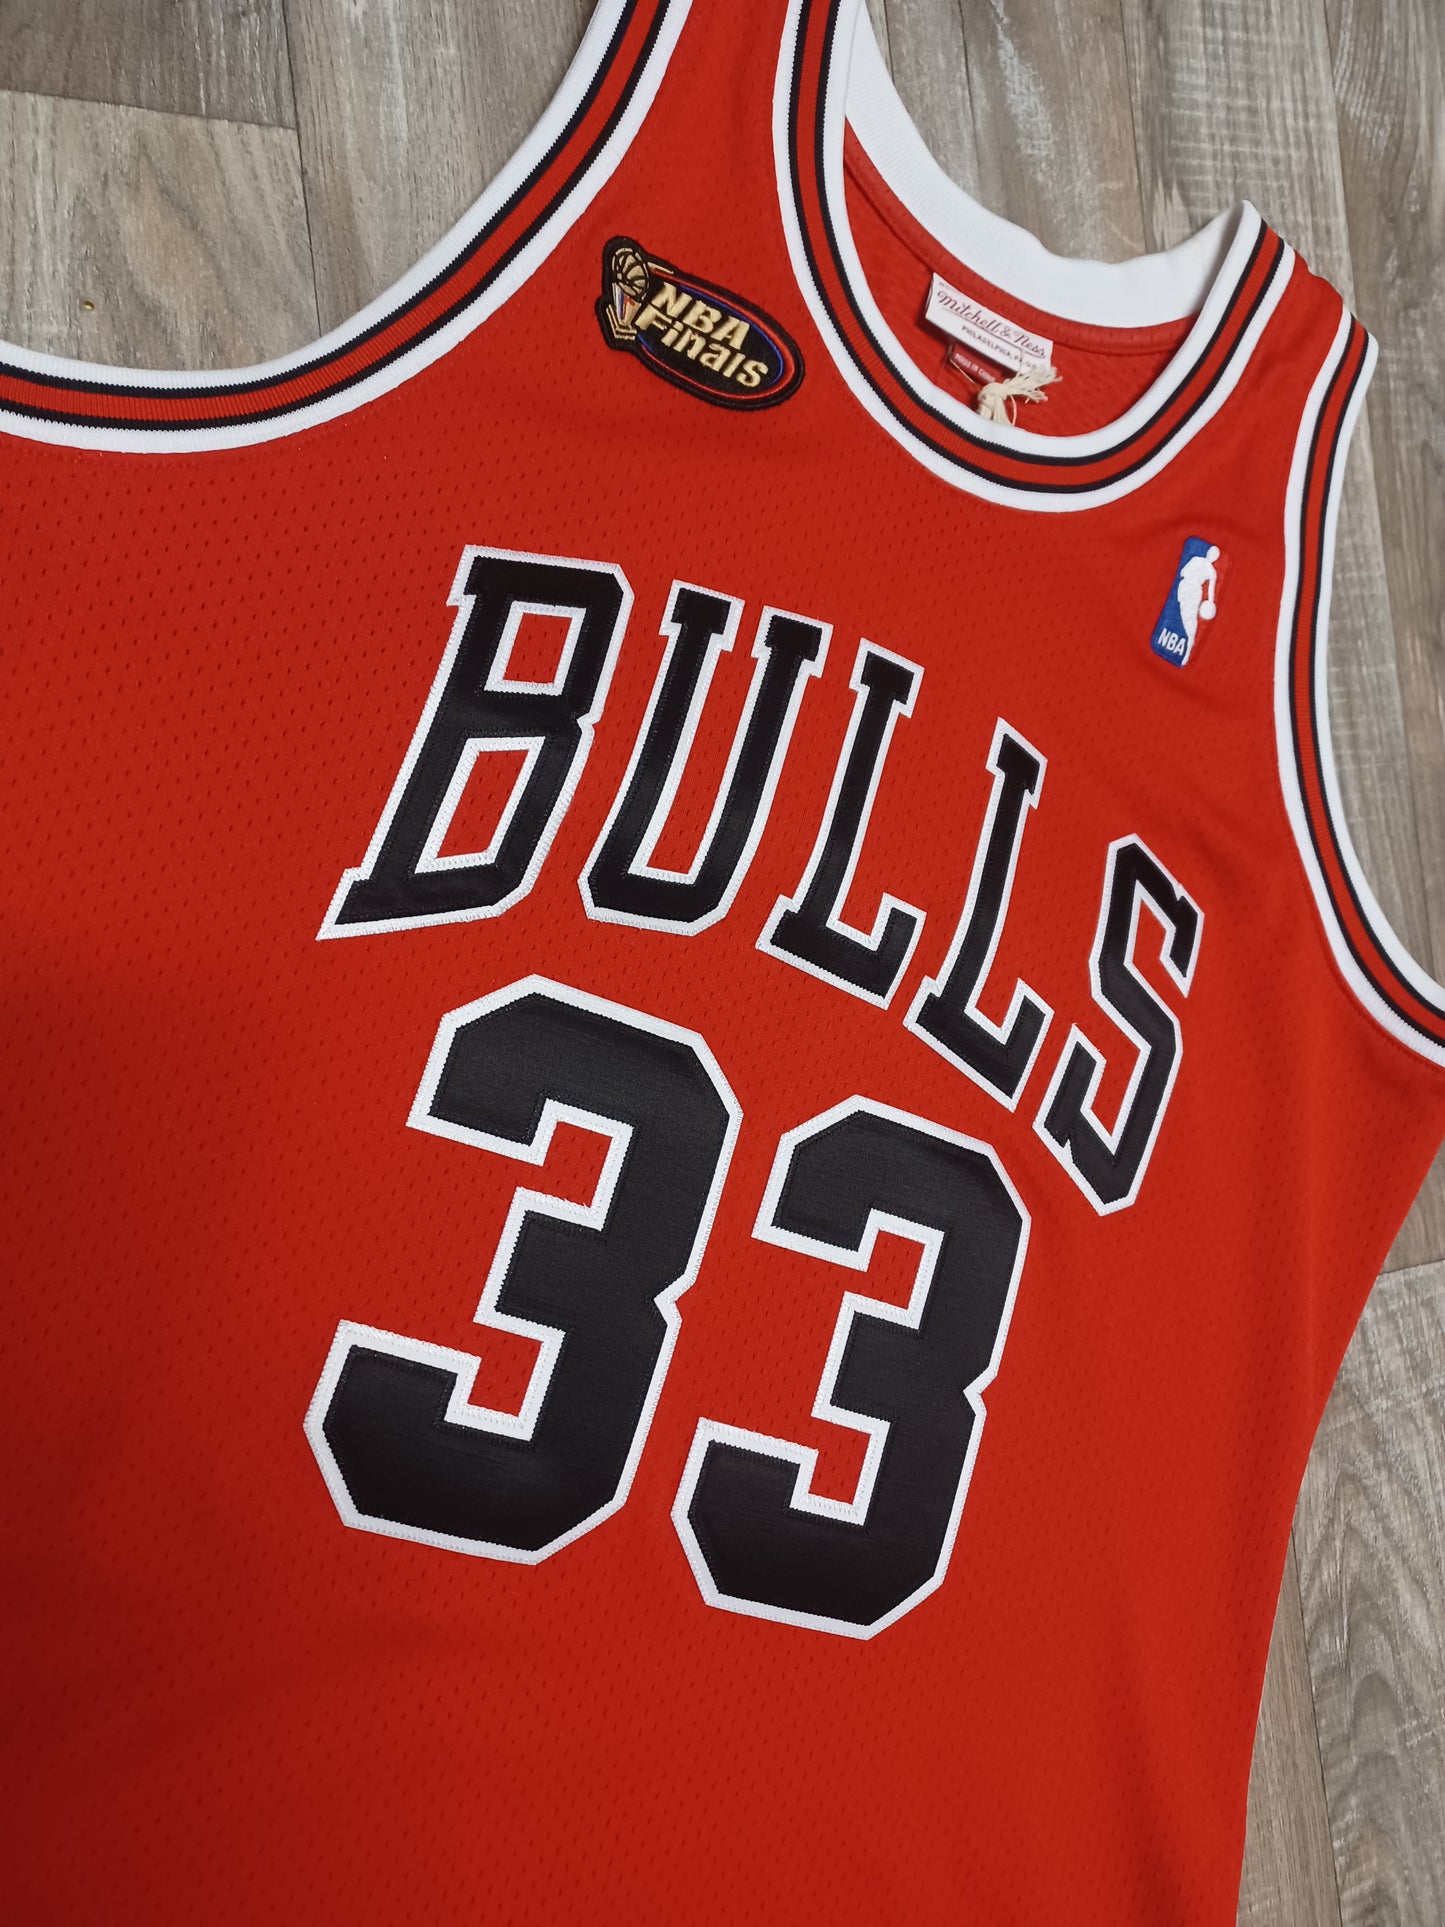 Scottie Pippen Authentic Chicago Bulls Jersey Size Medium